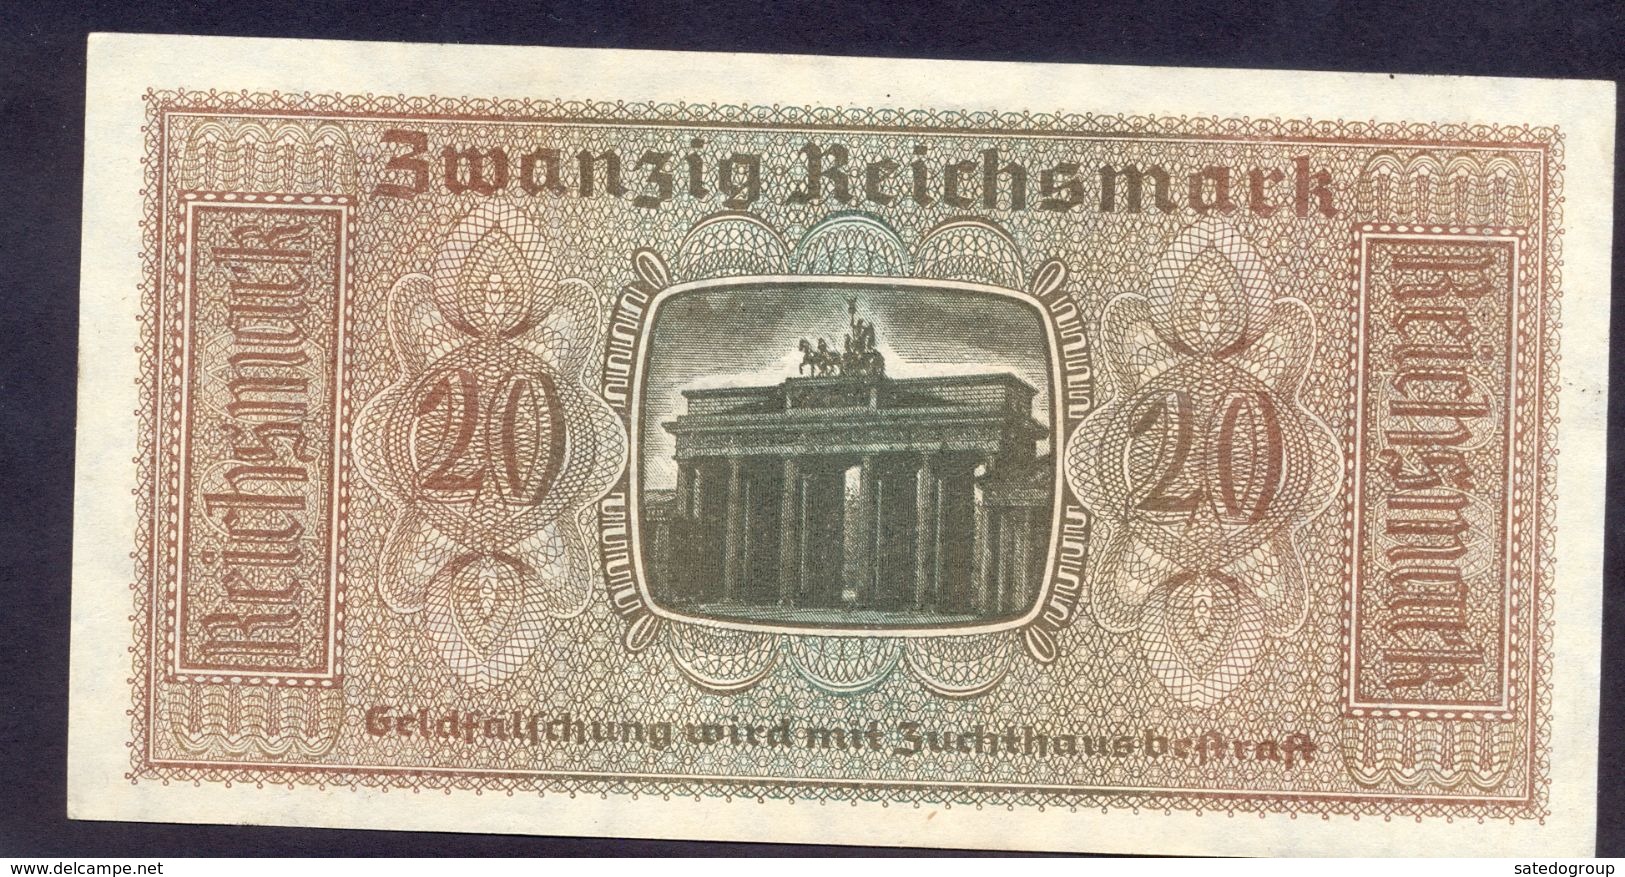 Germany 20 Reichsmark WWII Occupied Territories ND (1940-1945) AUNC P- R139 - 20 Reichsmark